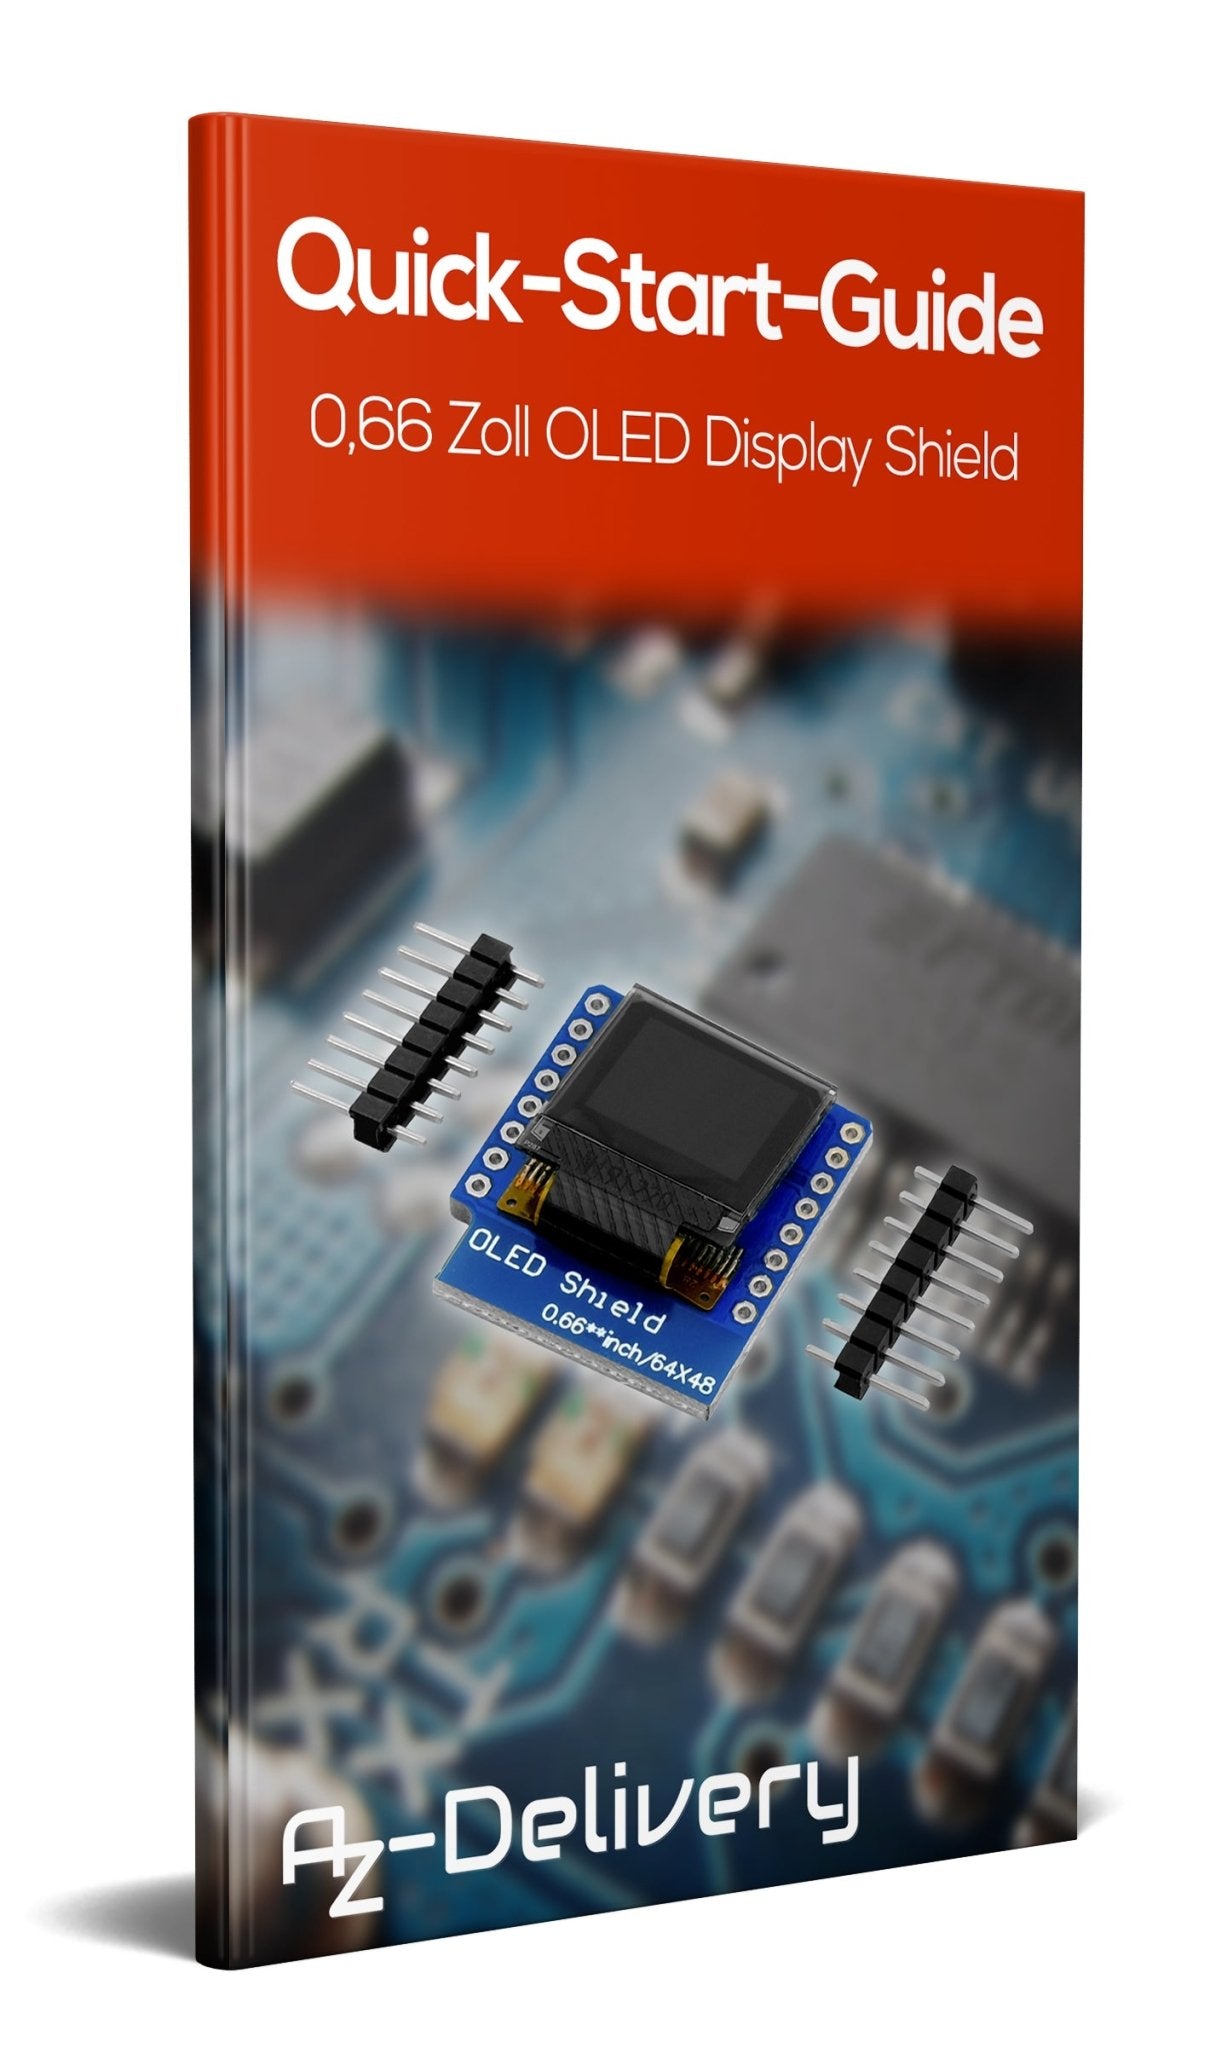 0.66 OLED display Shield